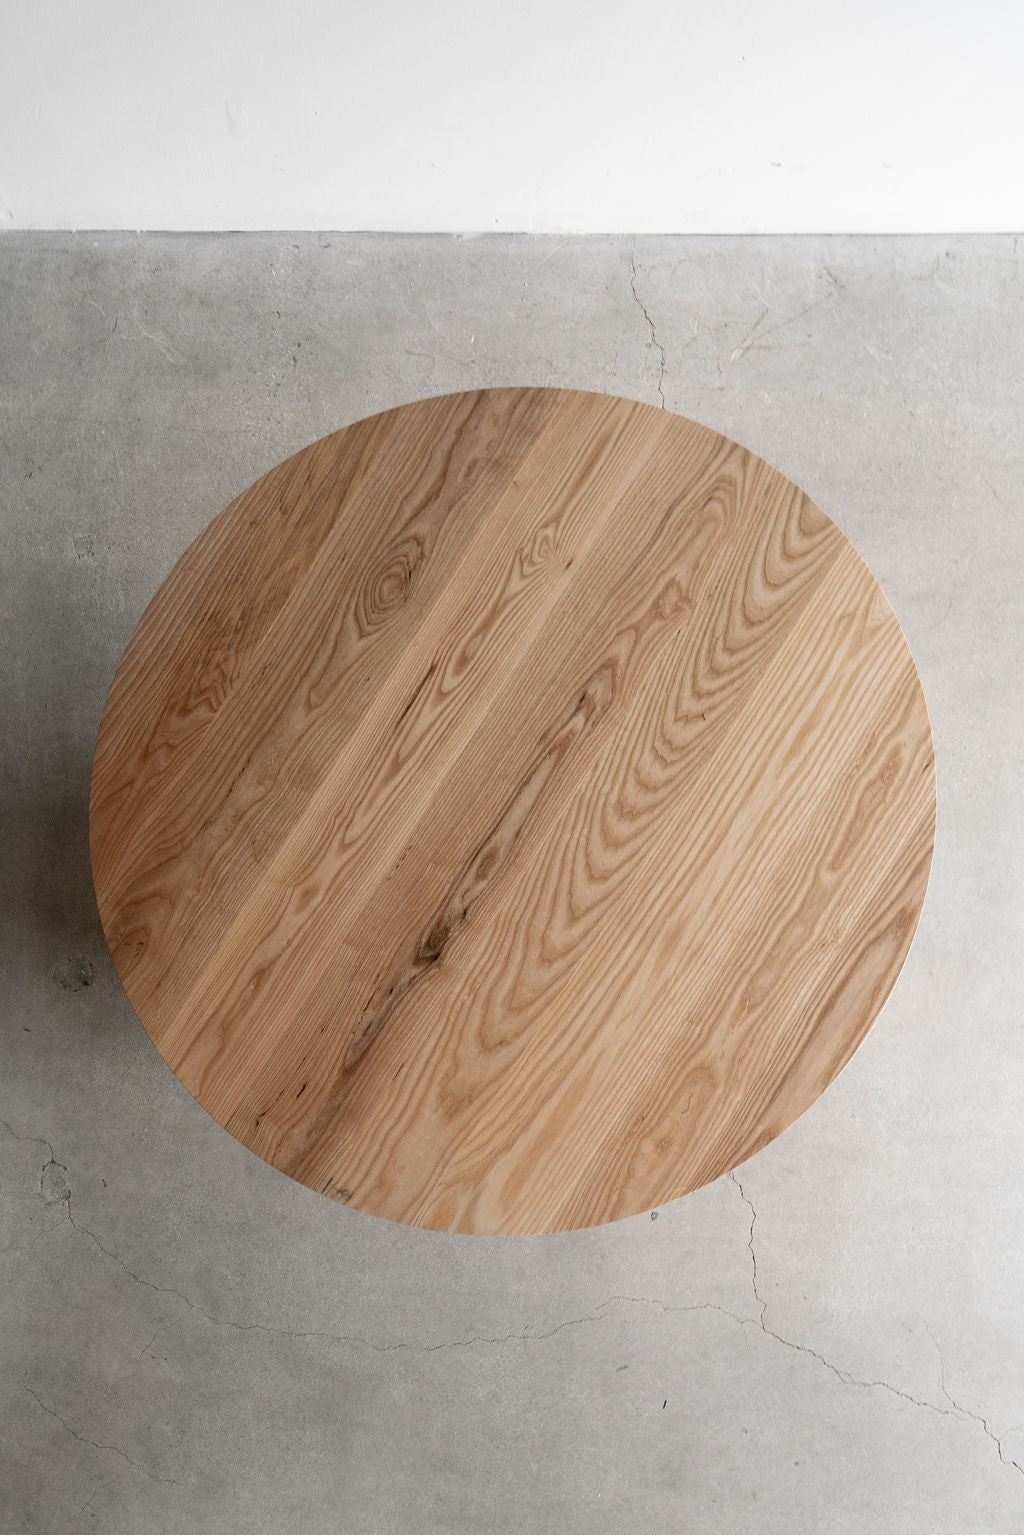 Tula Coffee table- Oak wood top